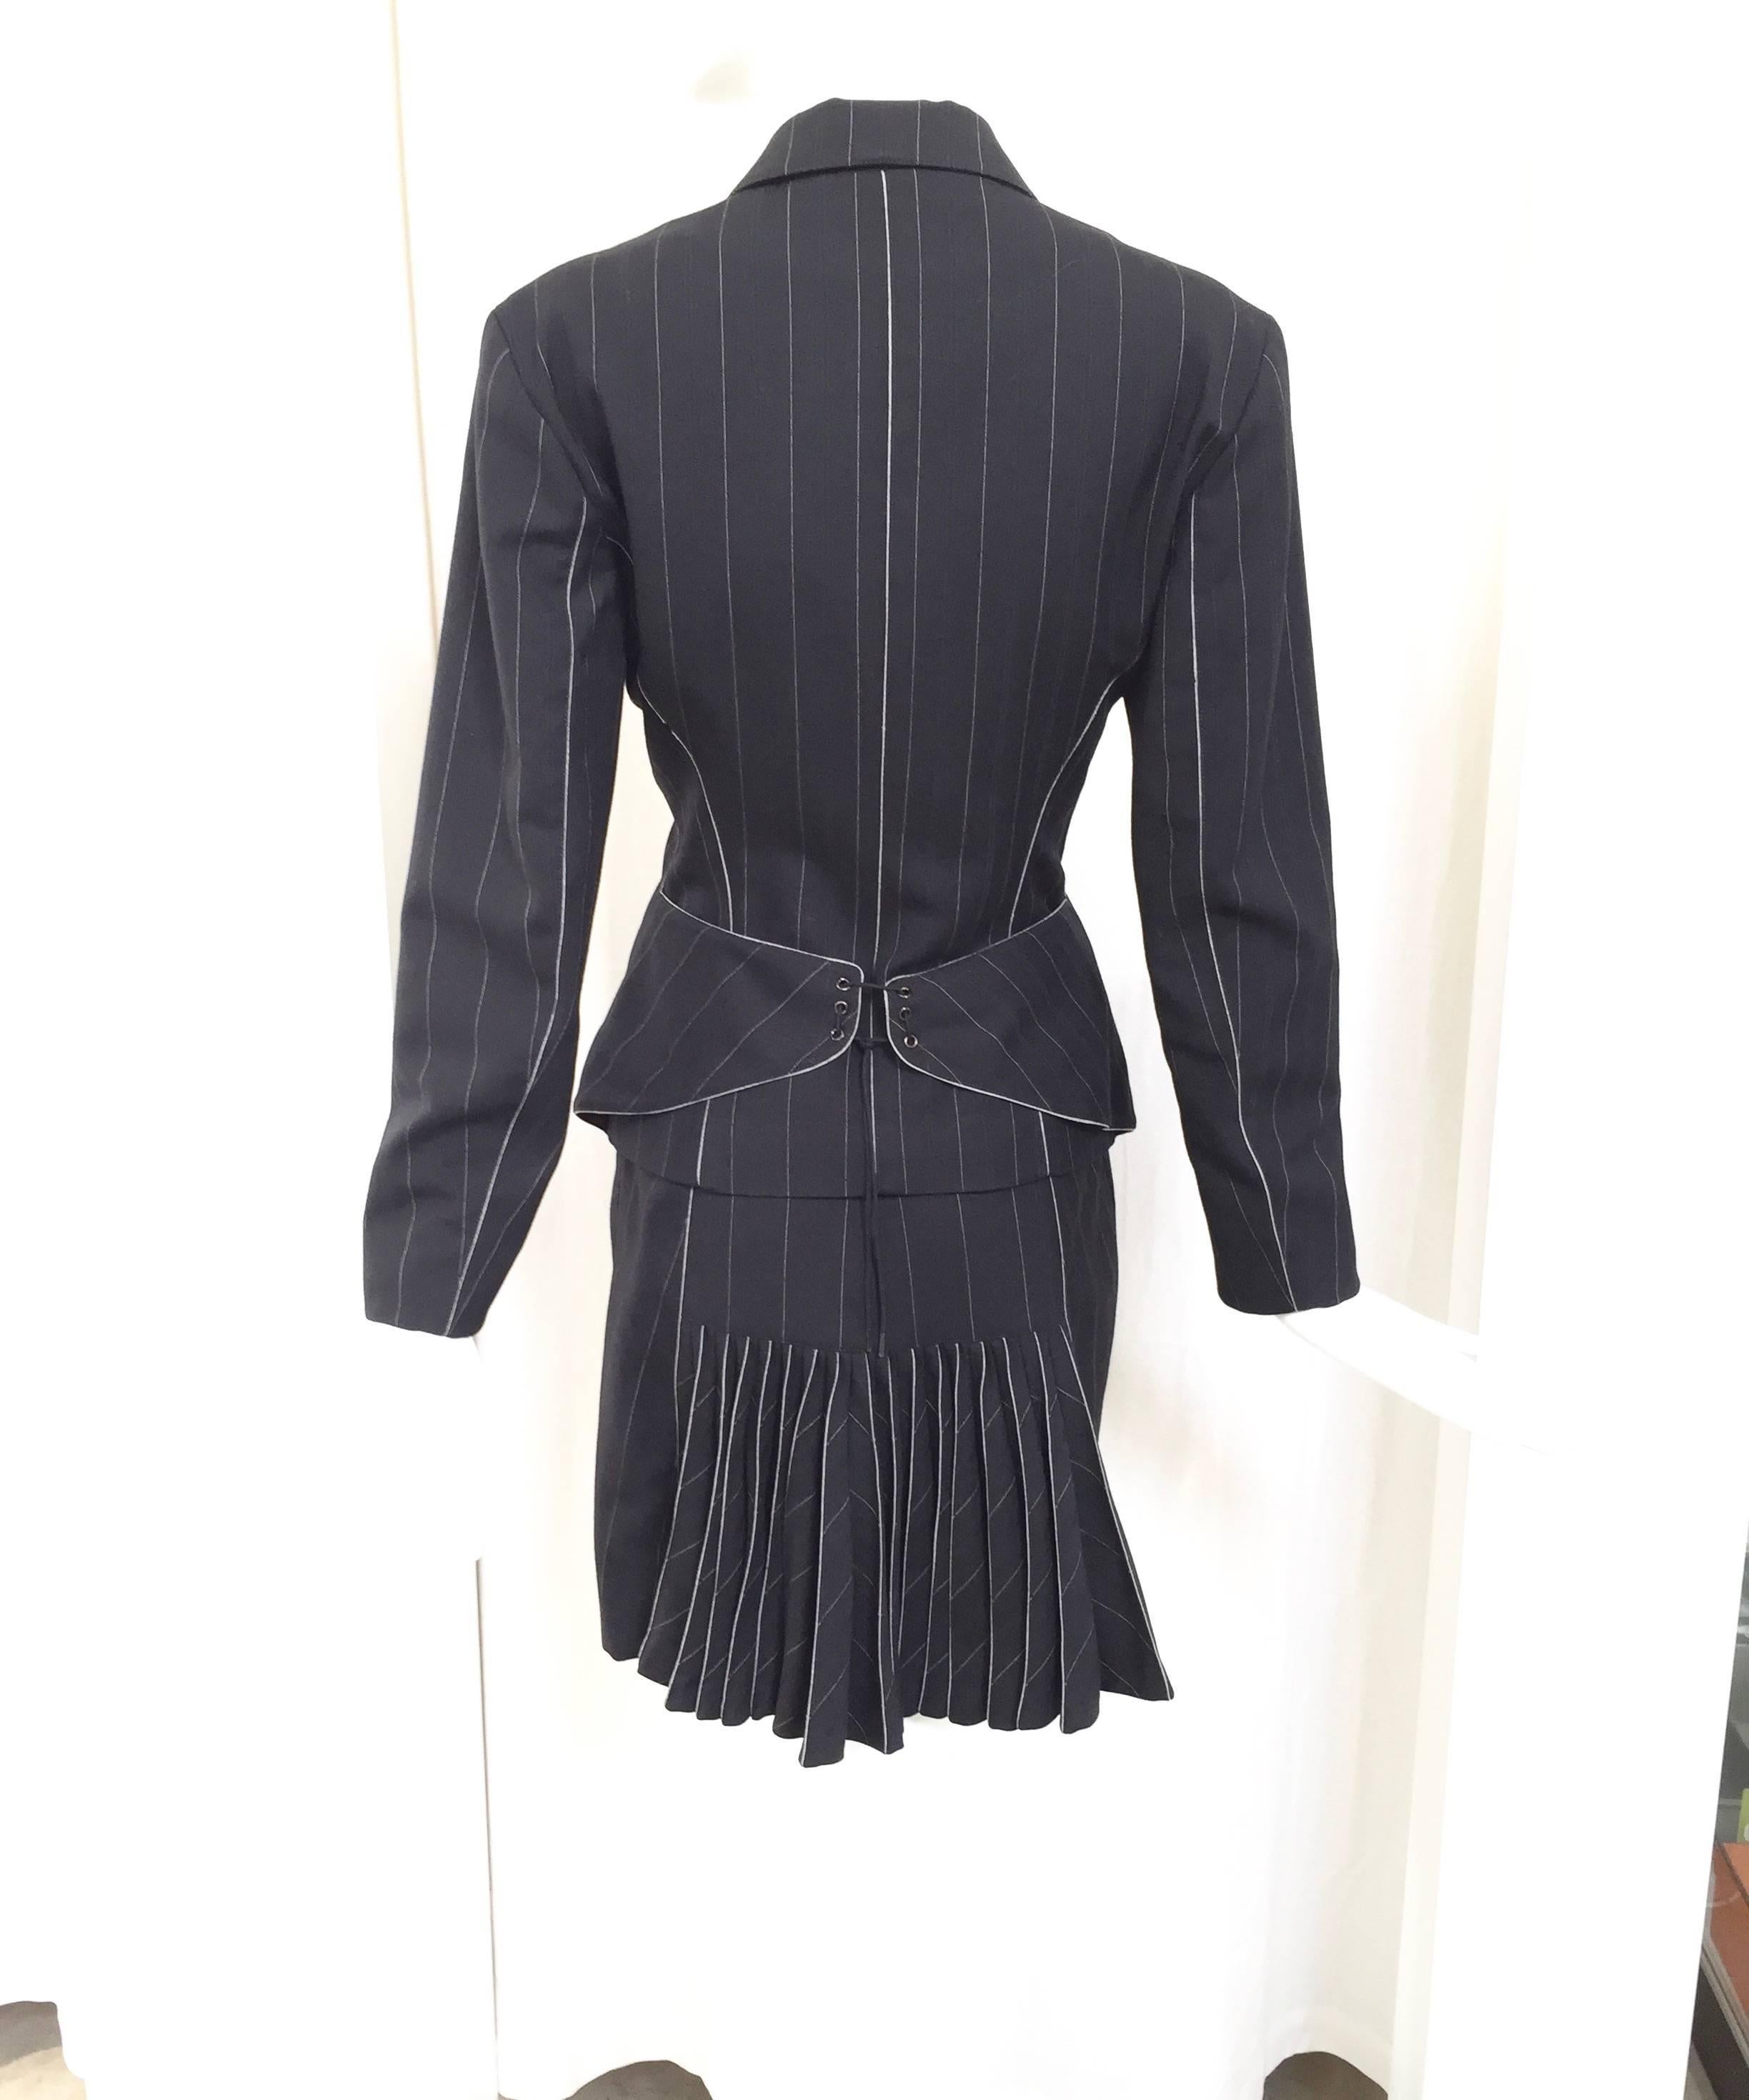 1980s ALAIA black wool gabardine fitted blazer and pleated mini skirt.
Size : 4/ Bust : 34"/ Waist : 27"/ Hip : 34"
